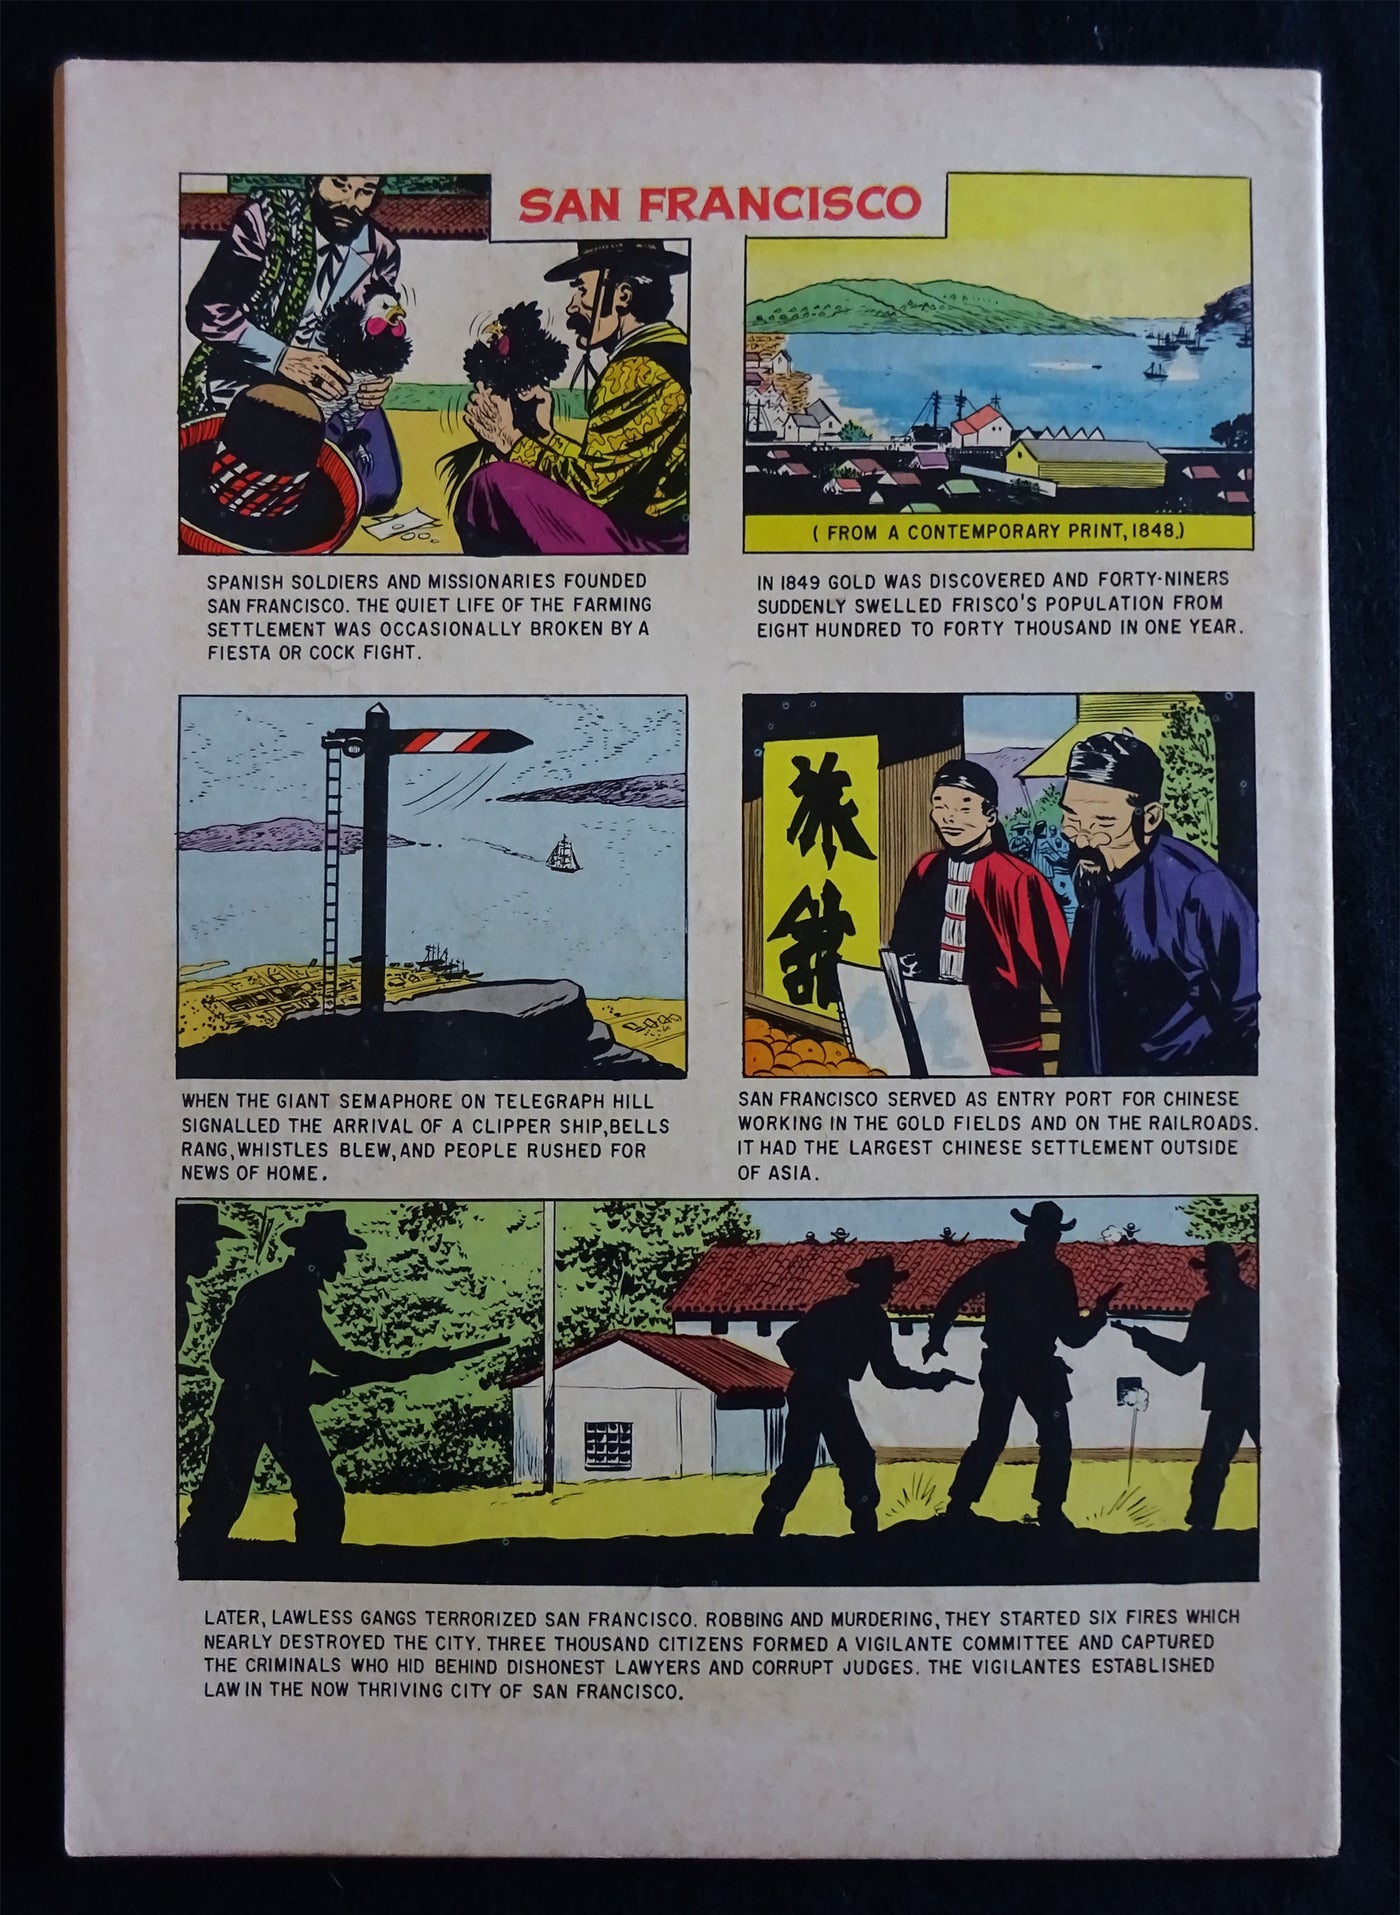 Have Gun, Will Travel #4 Dell Comics Jan-March 1960